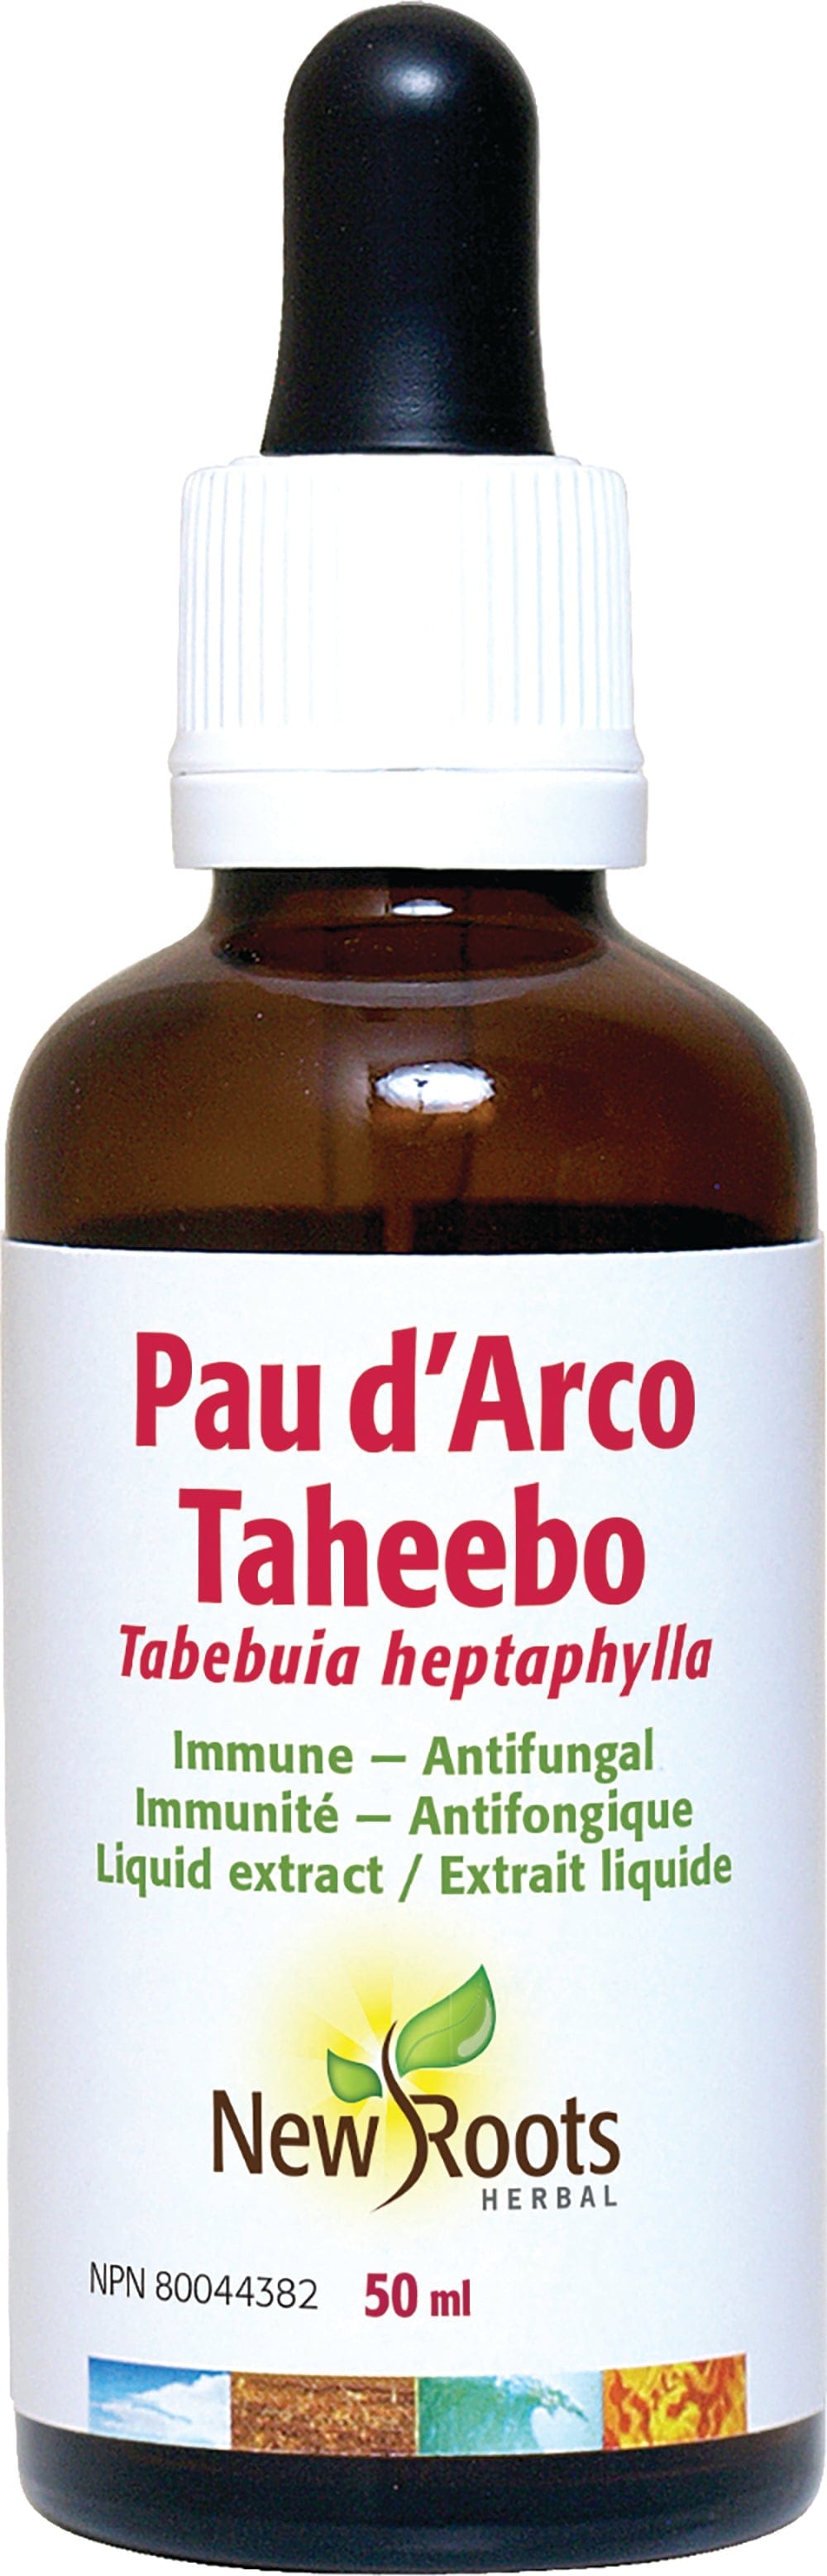 NEW ROOTS HERBAL Suppléments Pau d'Arco Taheebo (liquide) 50ml